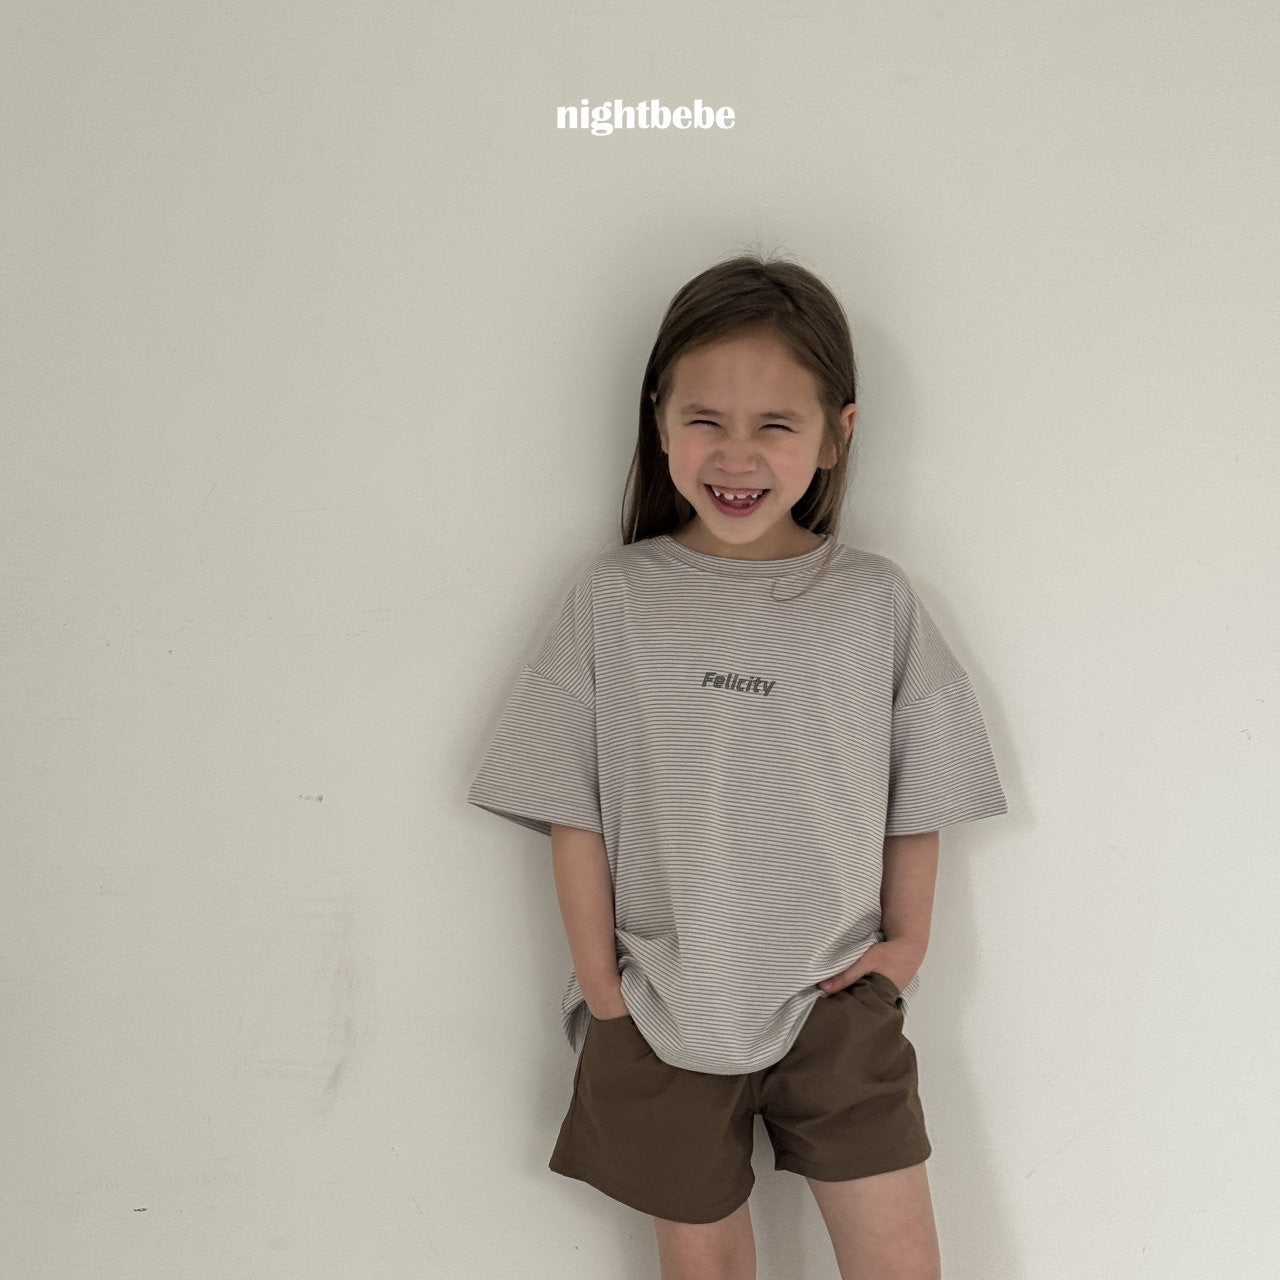 Nightbebe Feli half sleeve t-shirt (kids 80-120cm)